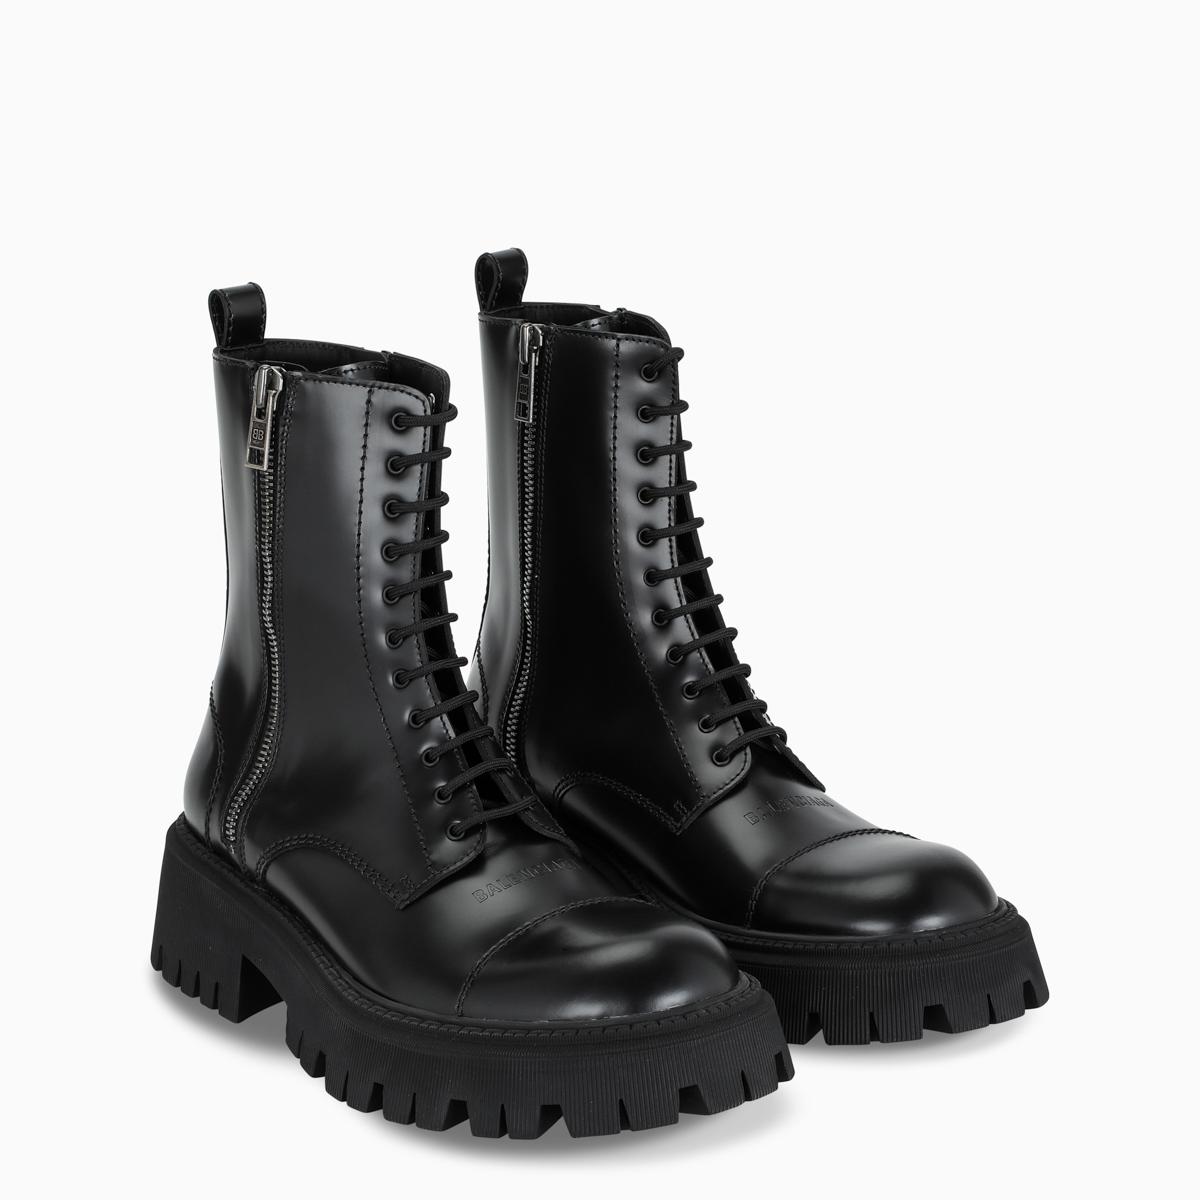 Balenciaga Black Tractor Military Boots for Men - Lyst